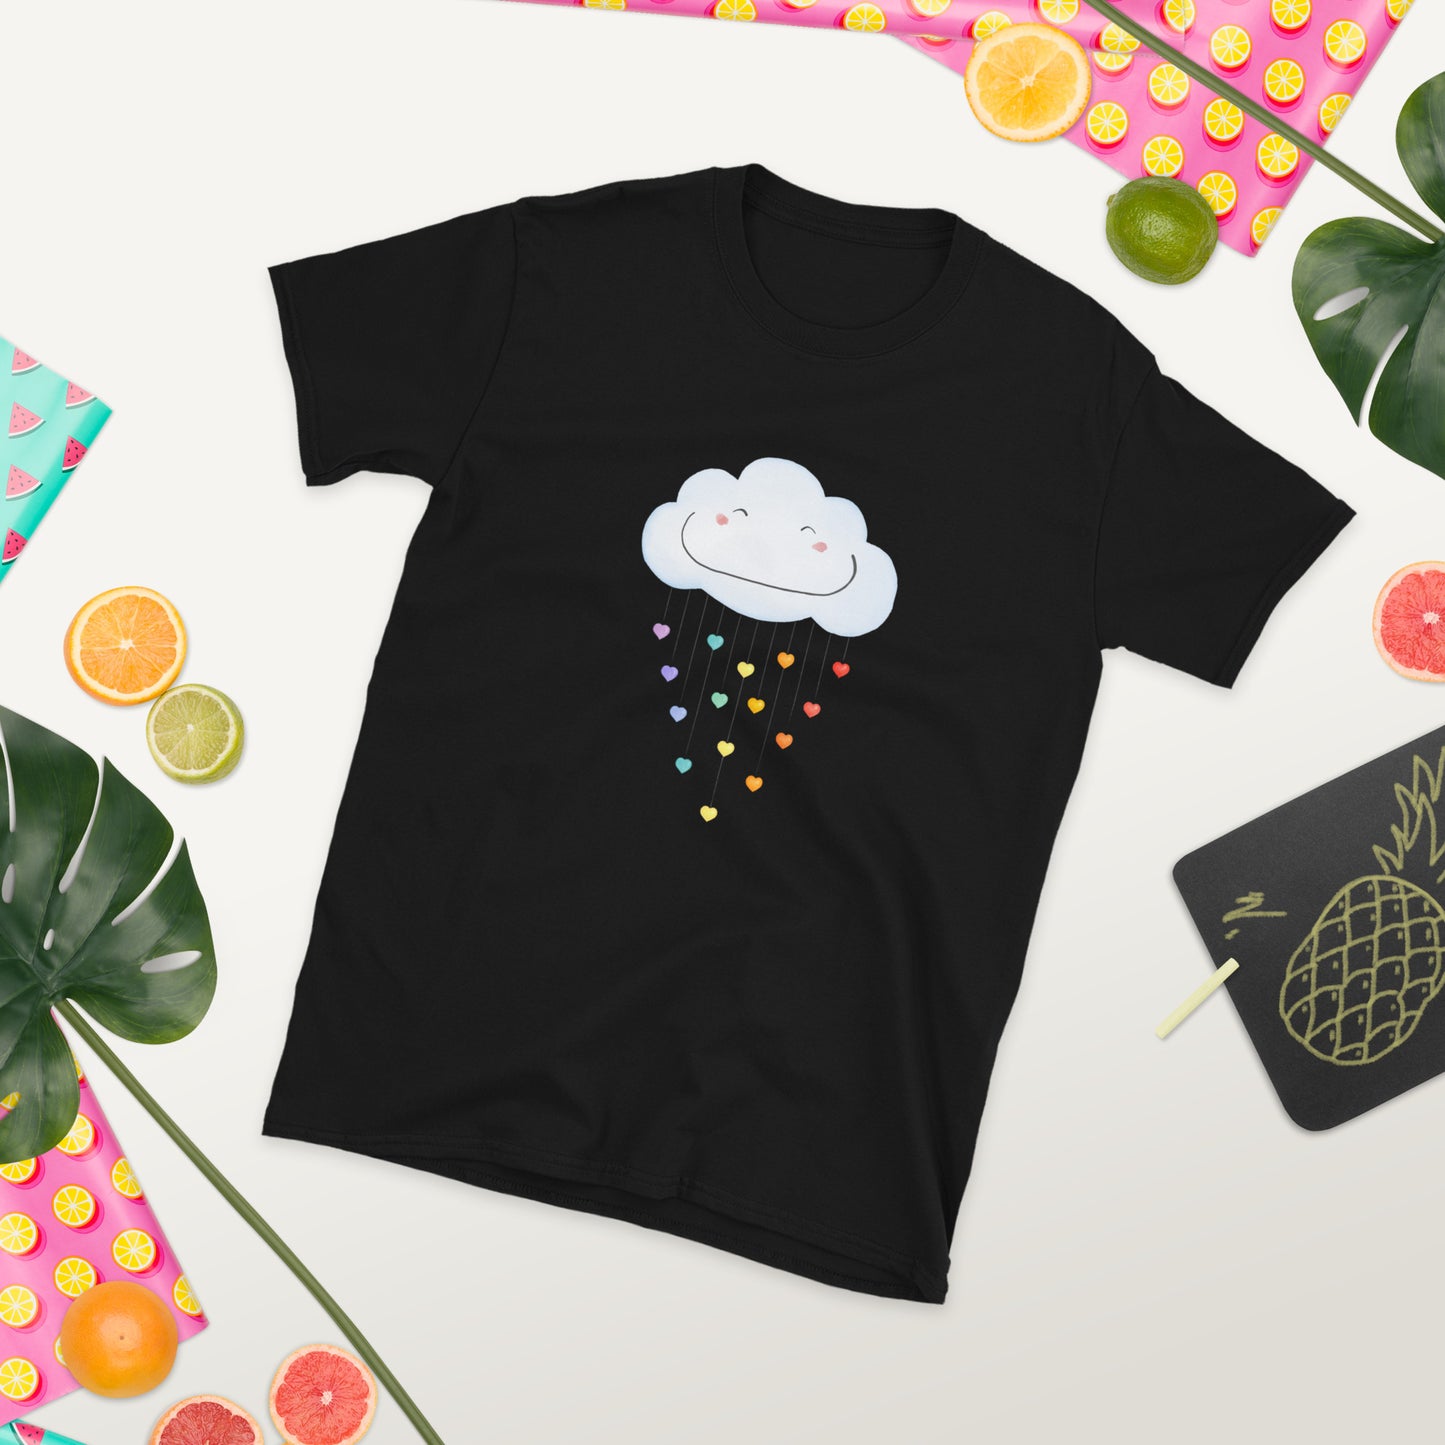 Short-Sleeve Unisex T-Shirt "Happy rainbow cloud"